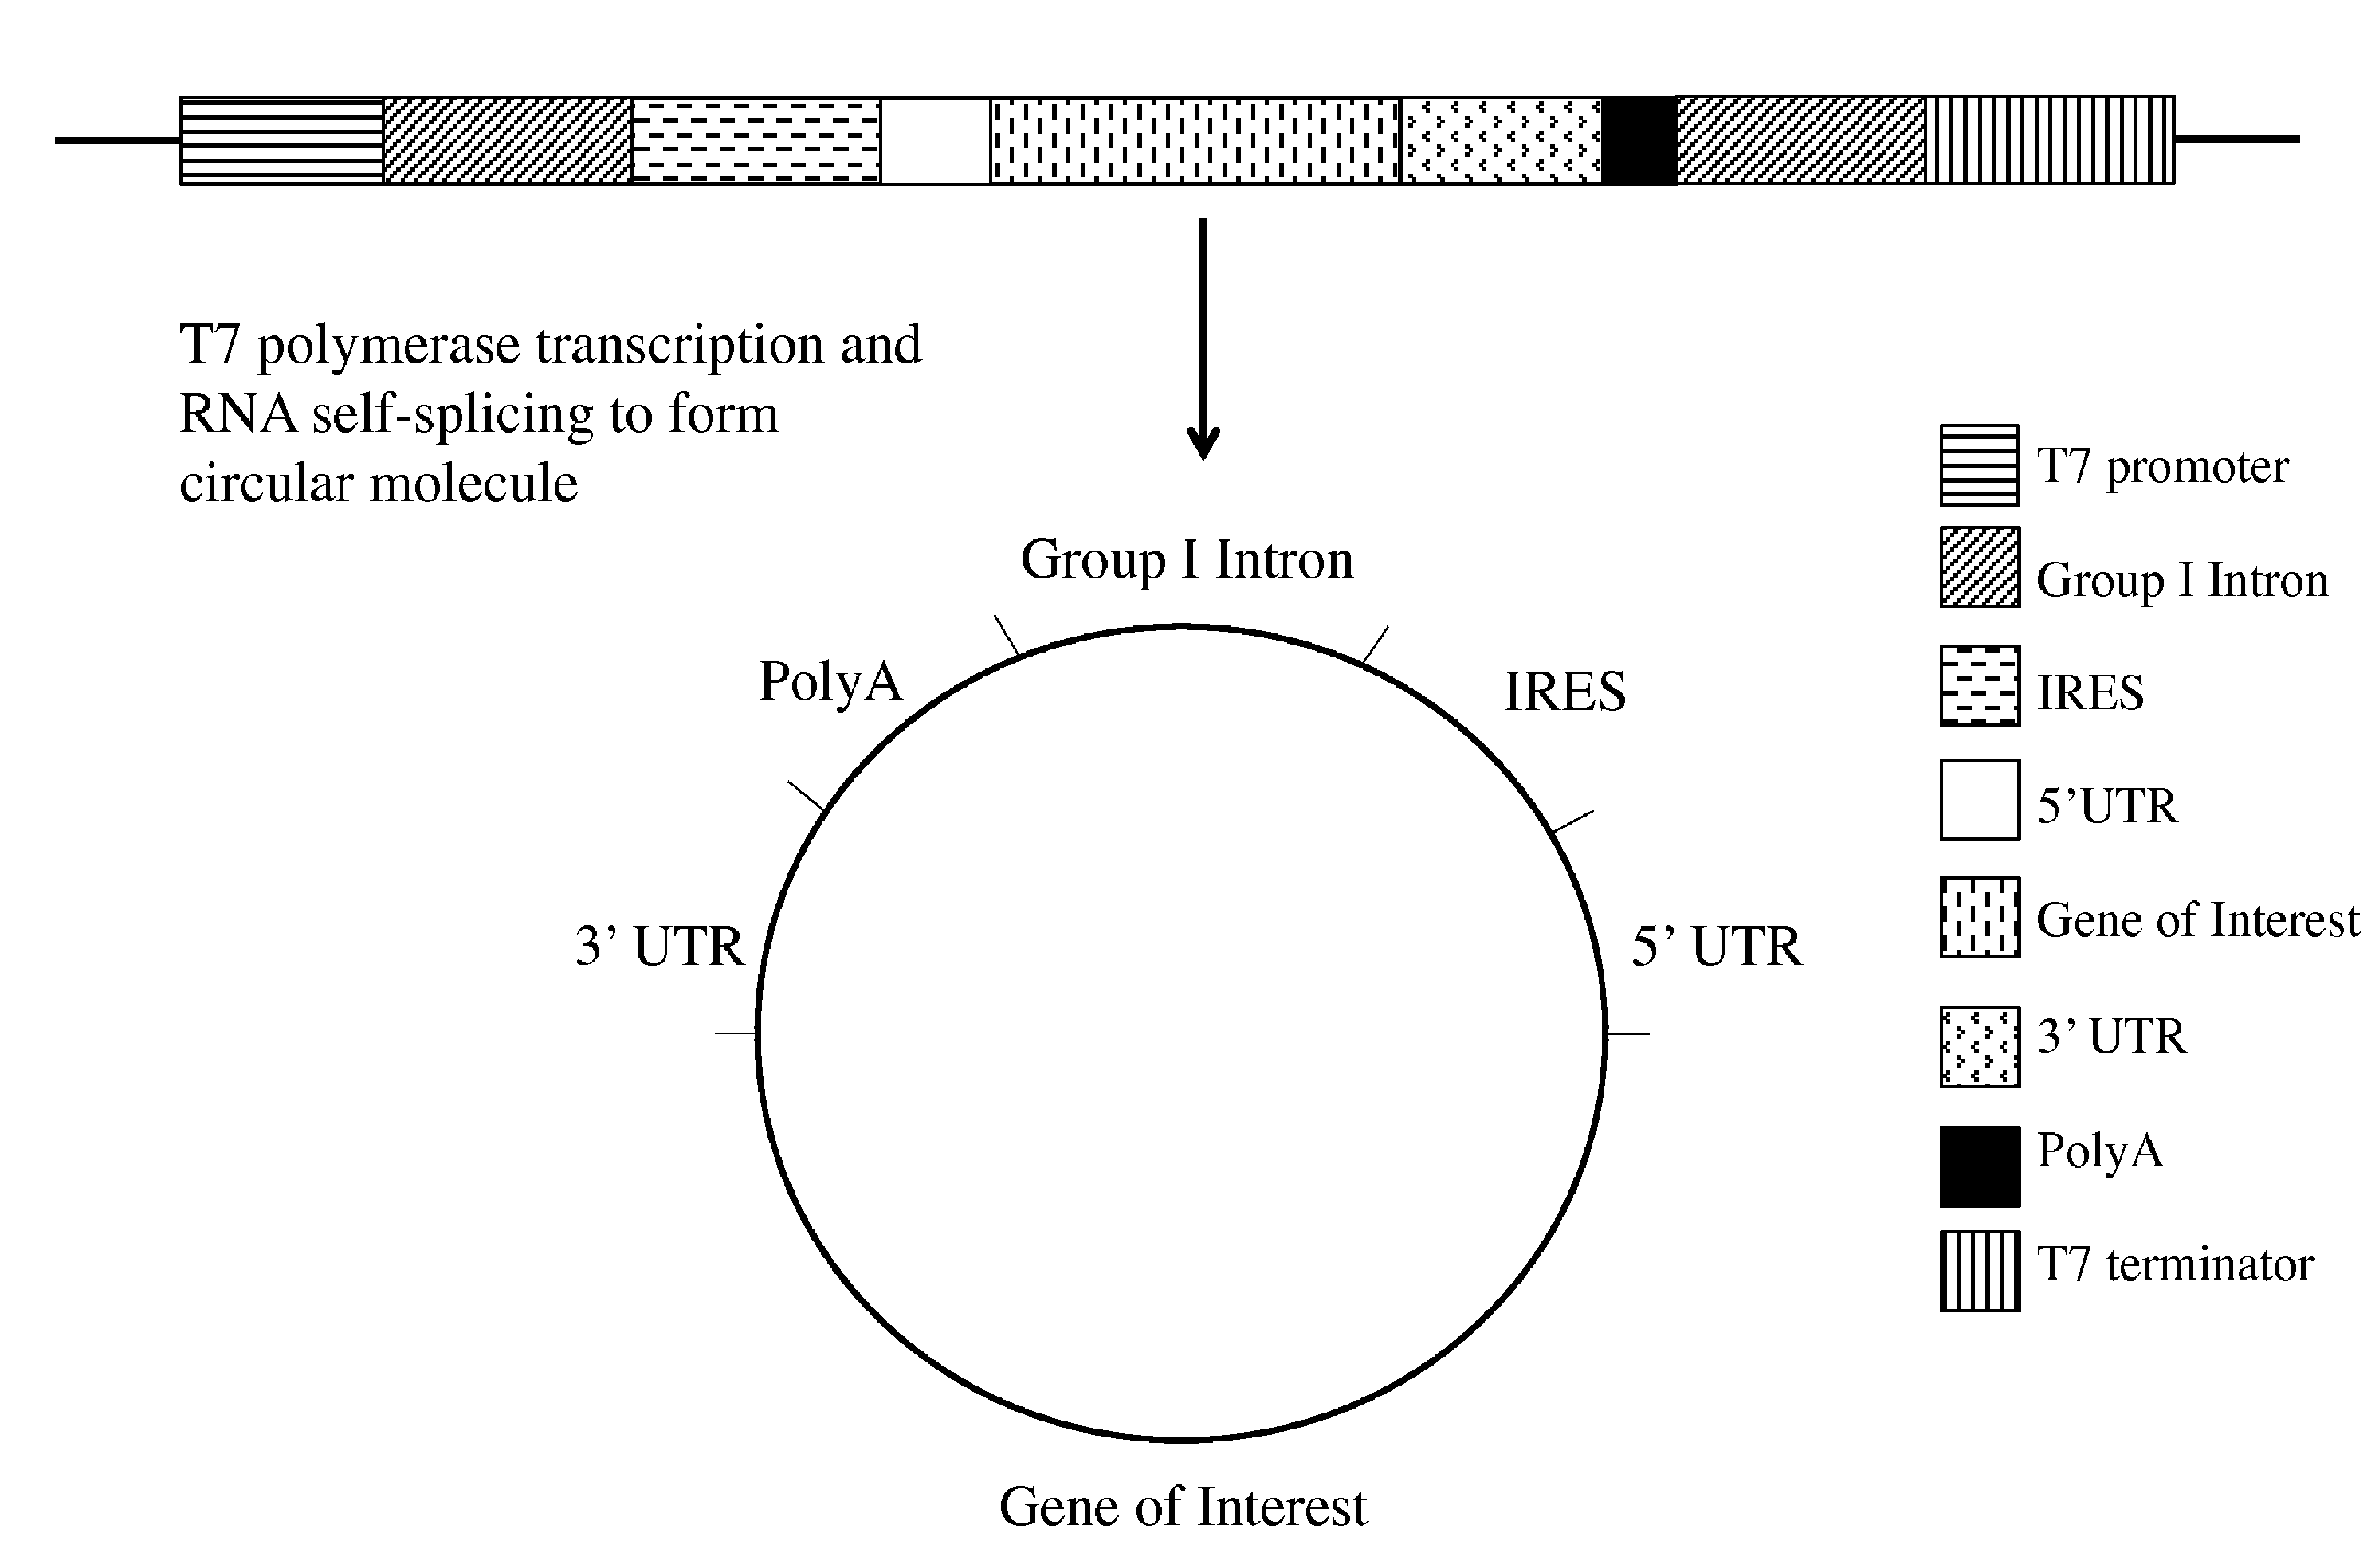 Intracellular translation of circular RNA